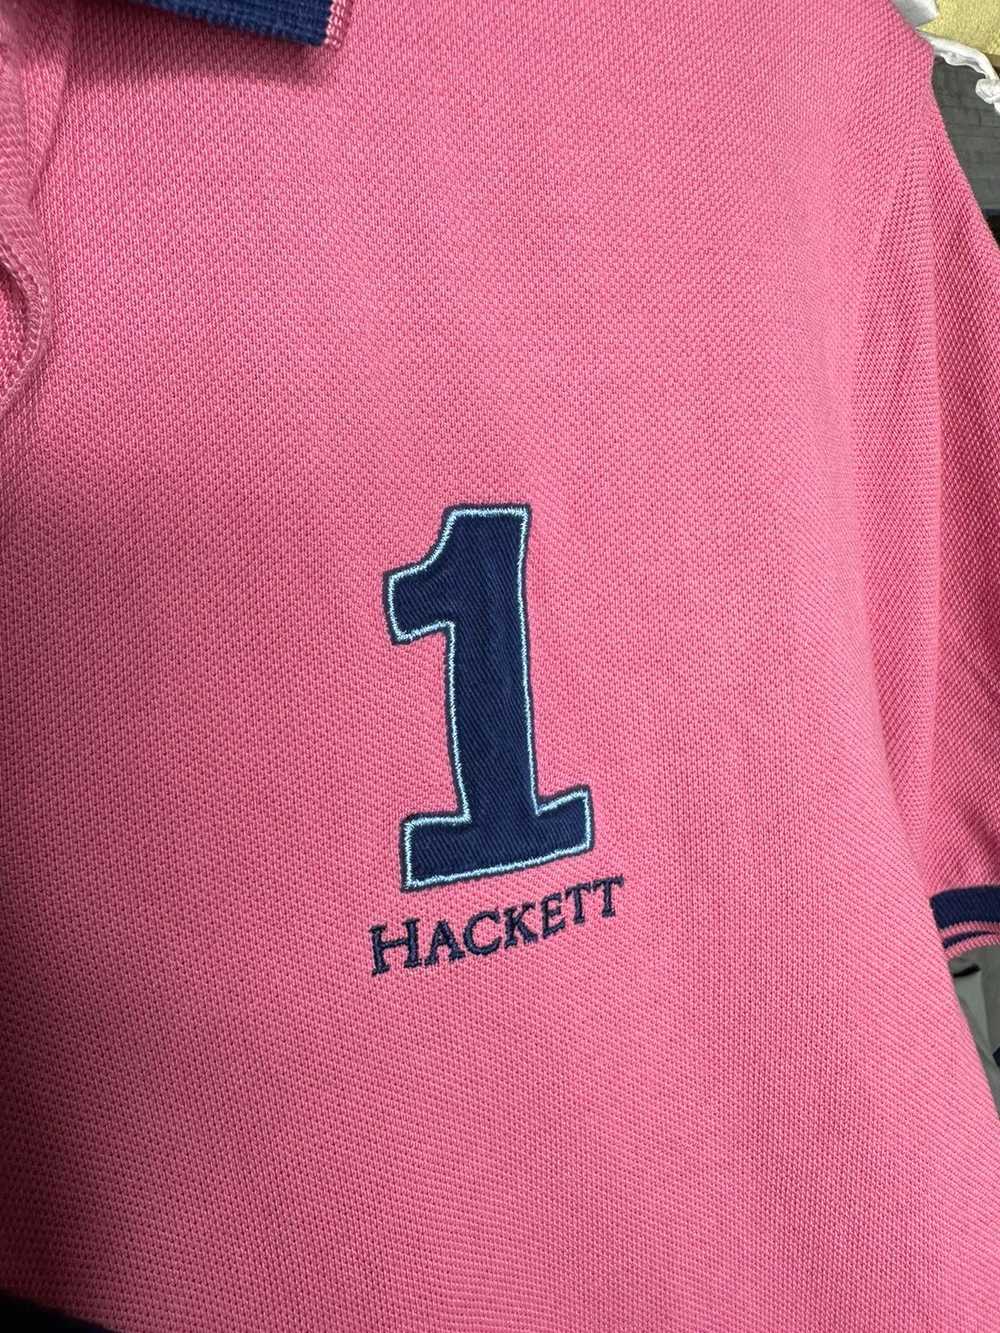 Hackett × Streetwear Hackett London 1 Polo Shirt - image 3